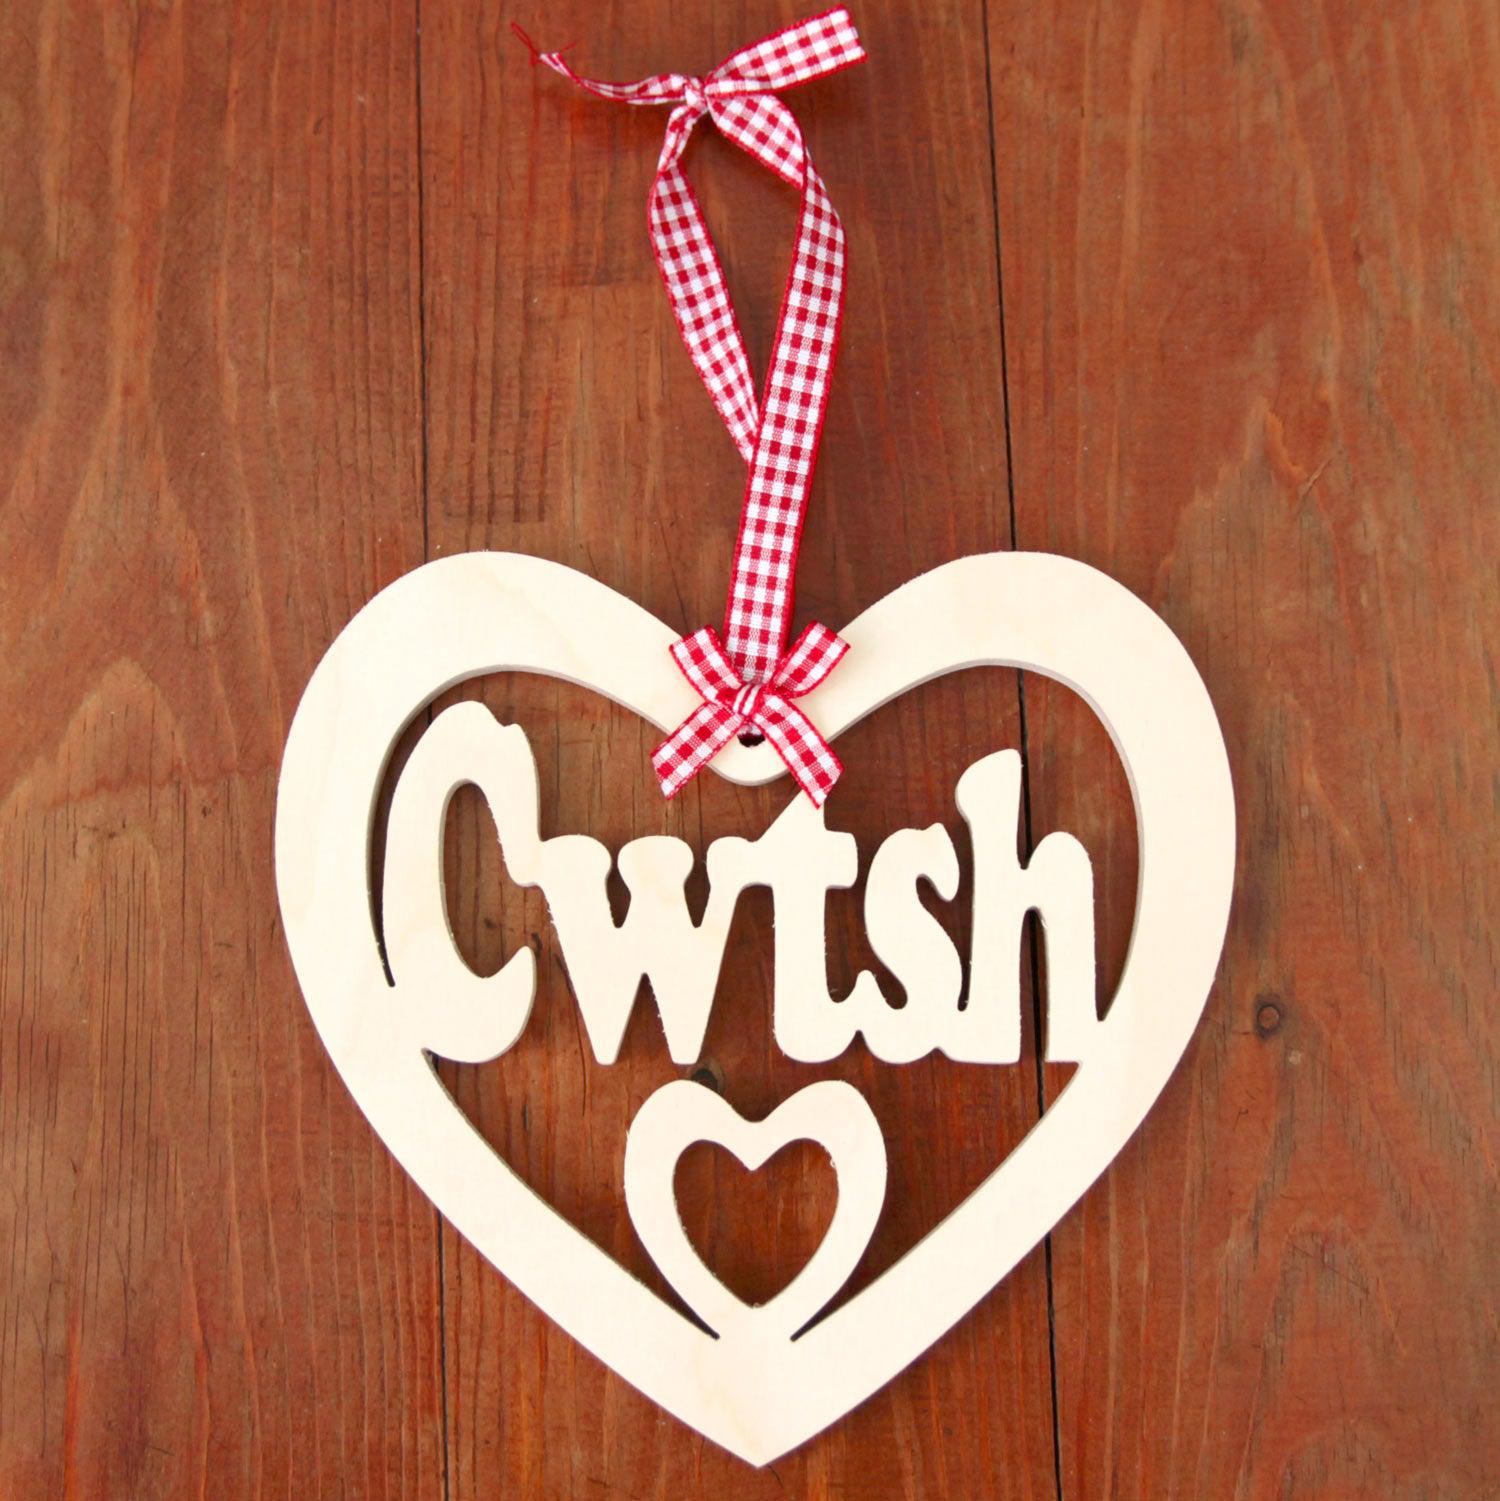 Decoration - Cwtch / Cwtsh - Cuddle - Wooden